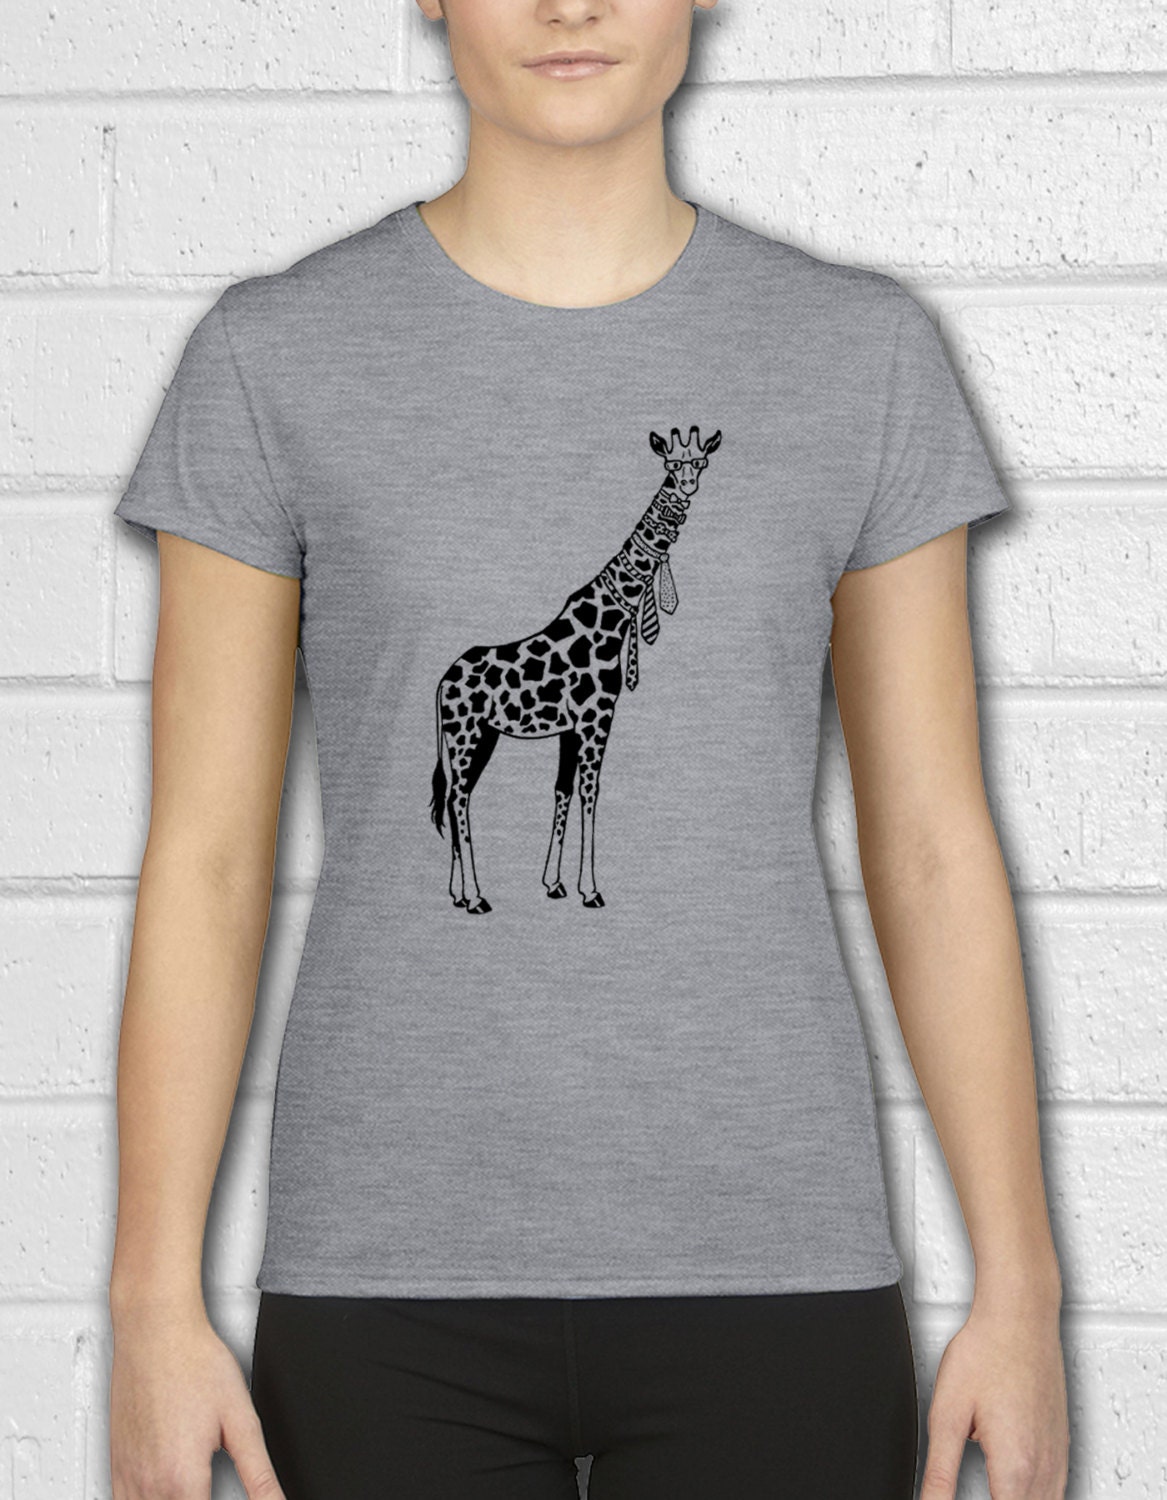 Giraffe Shirt Giraffe t shirt Womens shirt Animal Shirt